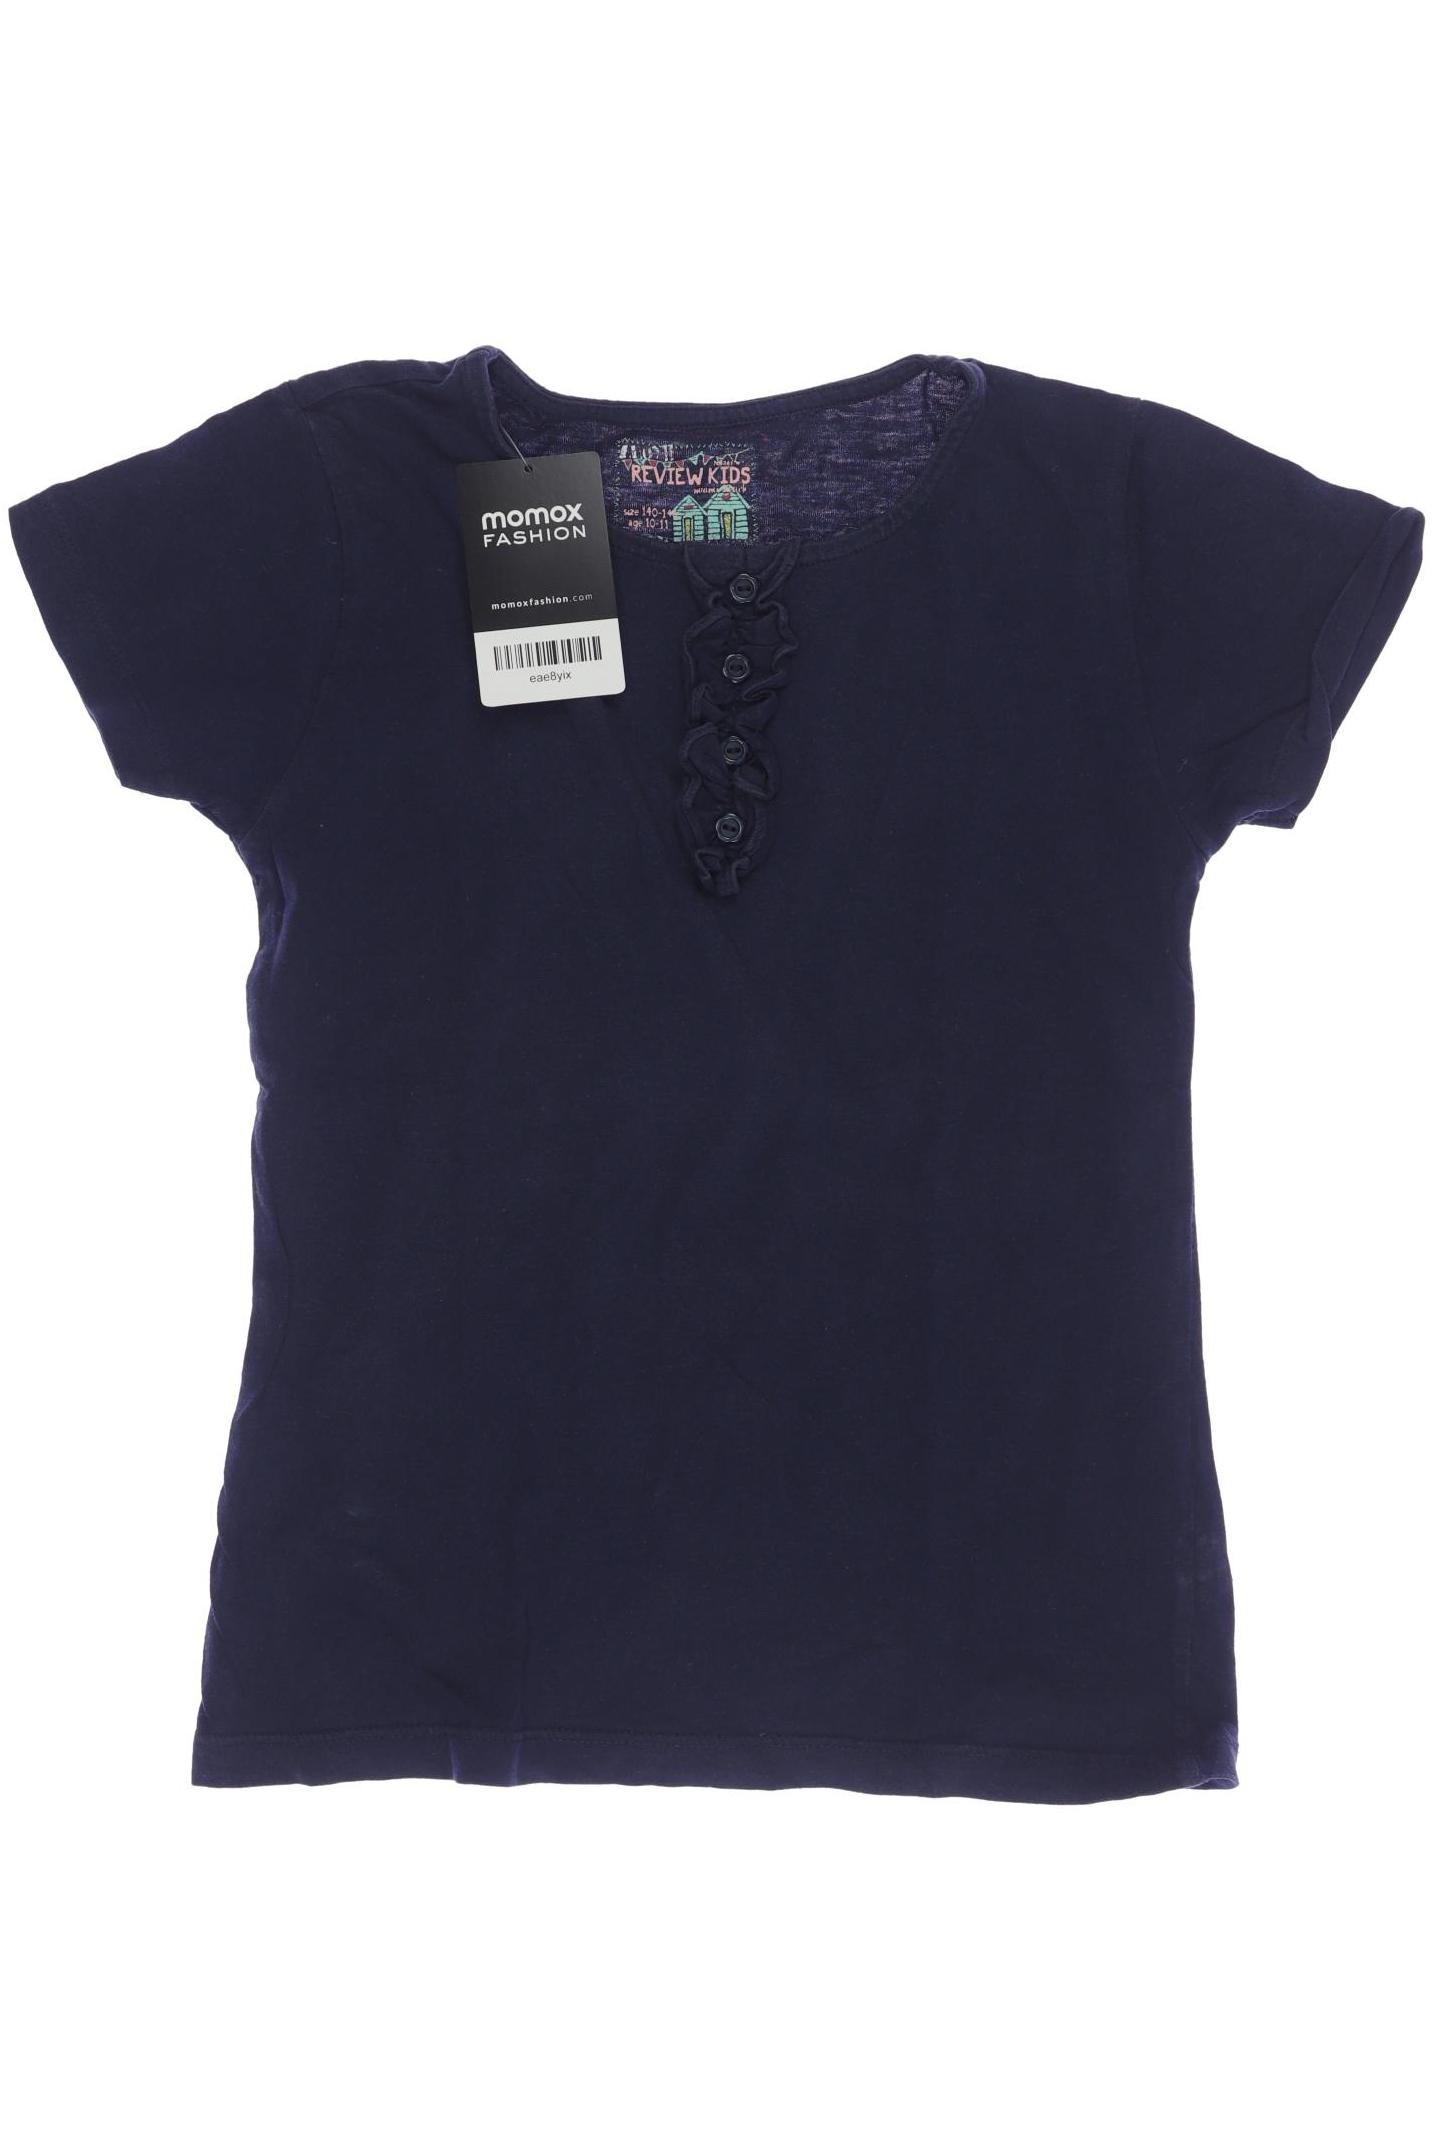 Review Damen T-Shirt, marineblau, Gr. 140 von Review